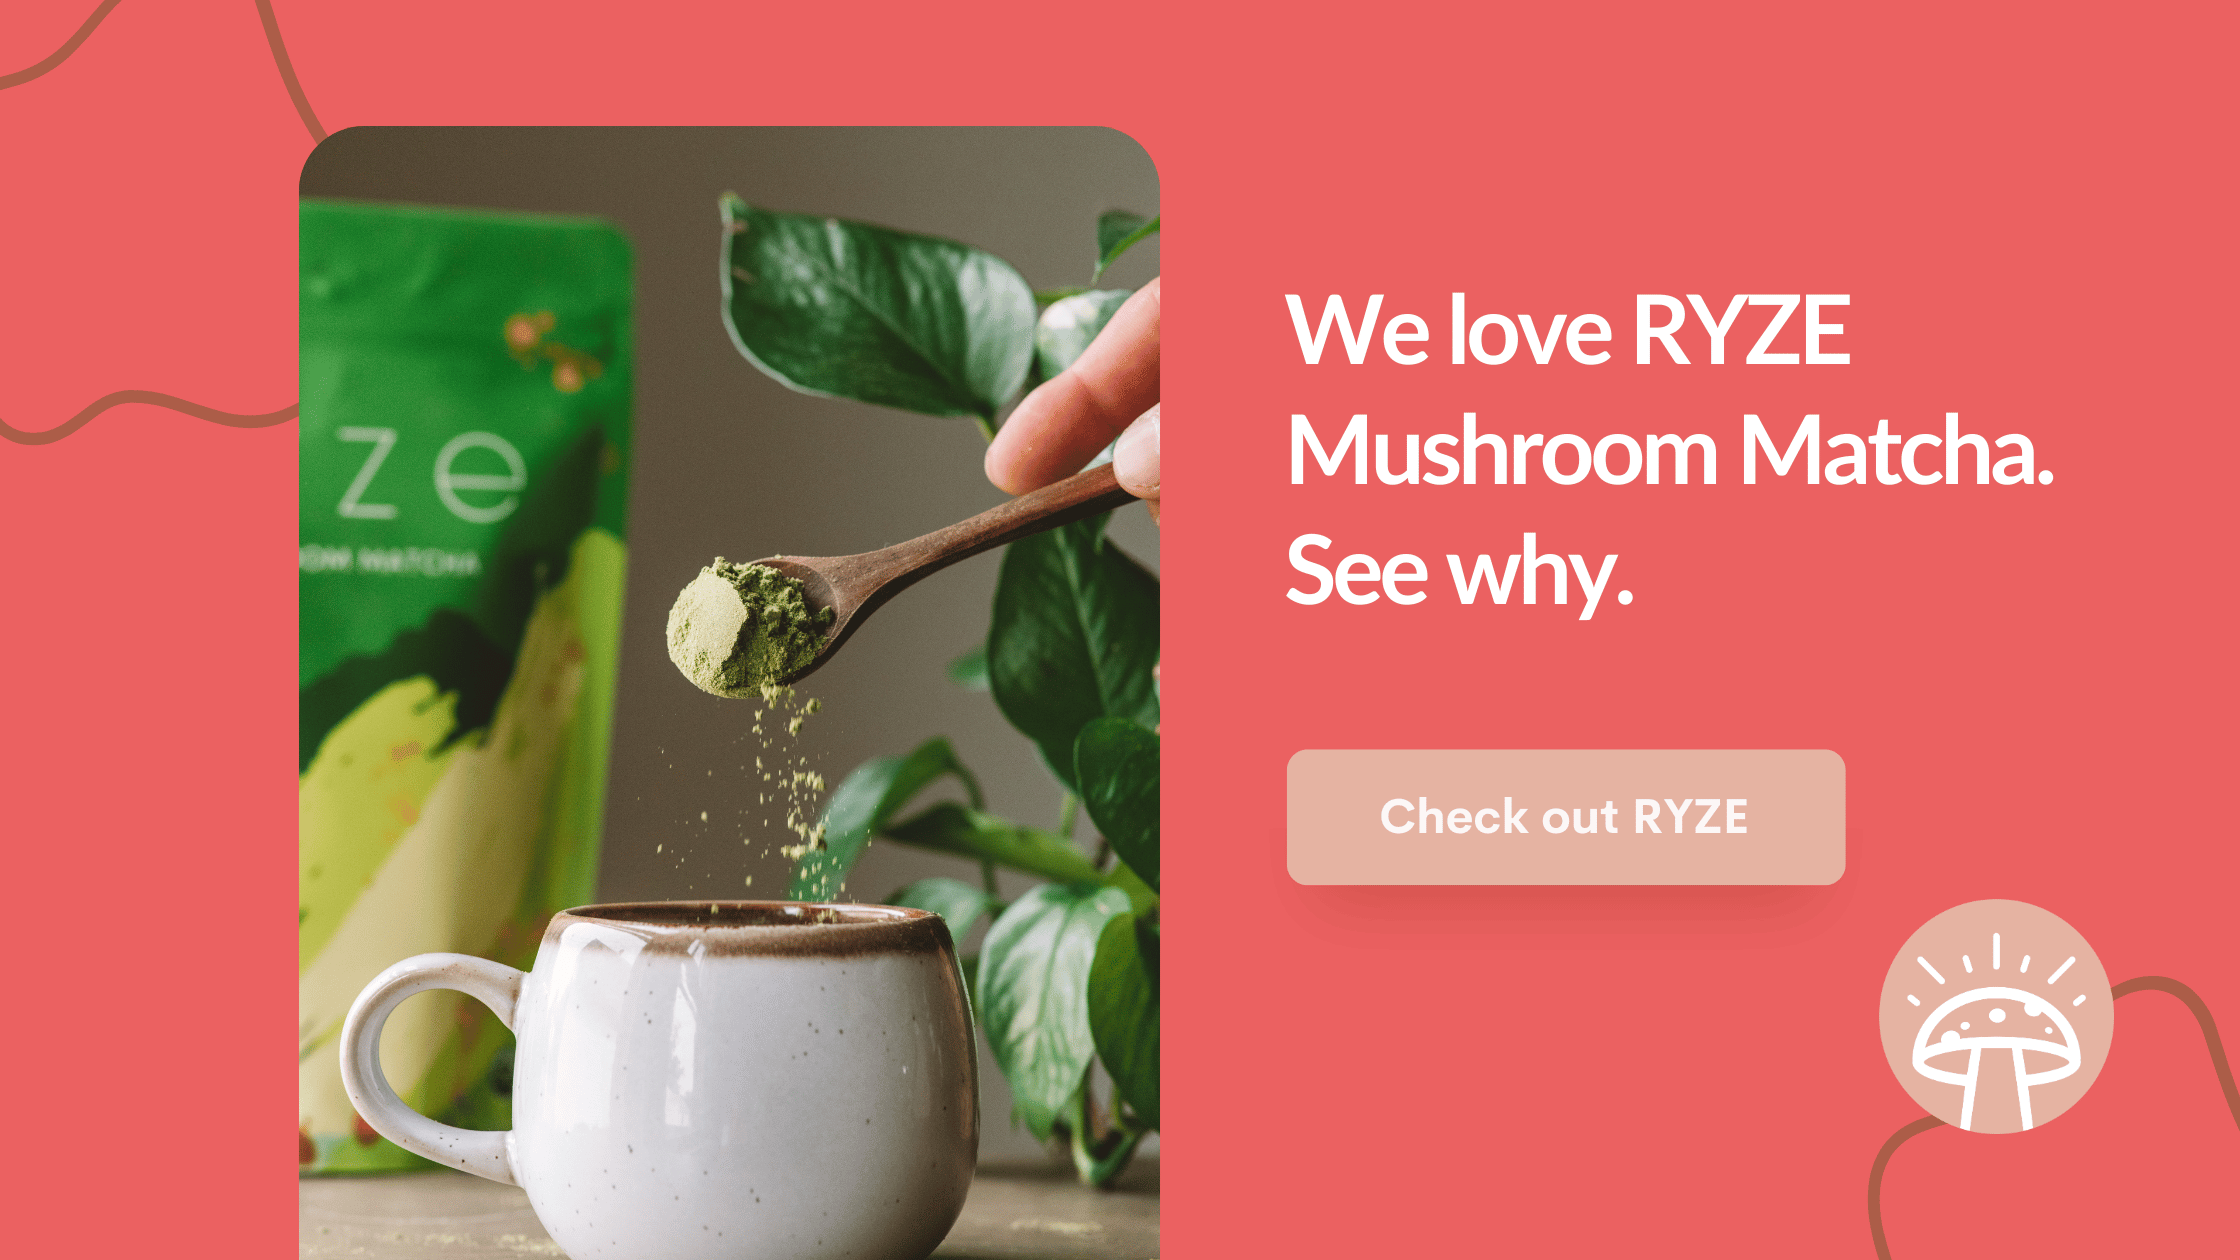 RYZE Mushroom Matchahttps://www.ryzesuperfoods.com/?ref=REMEDAY